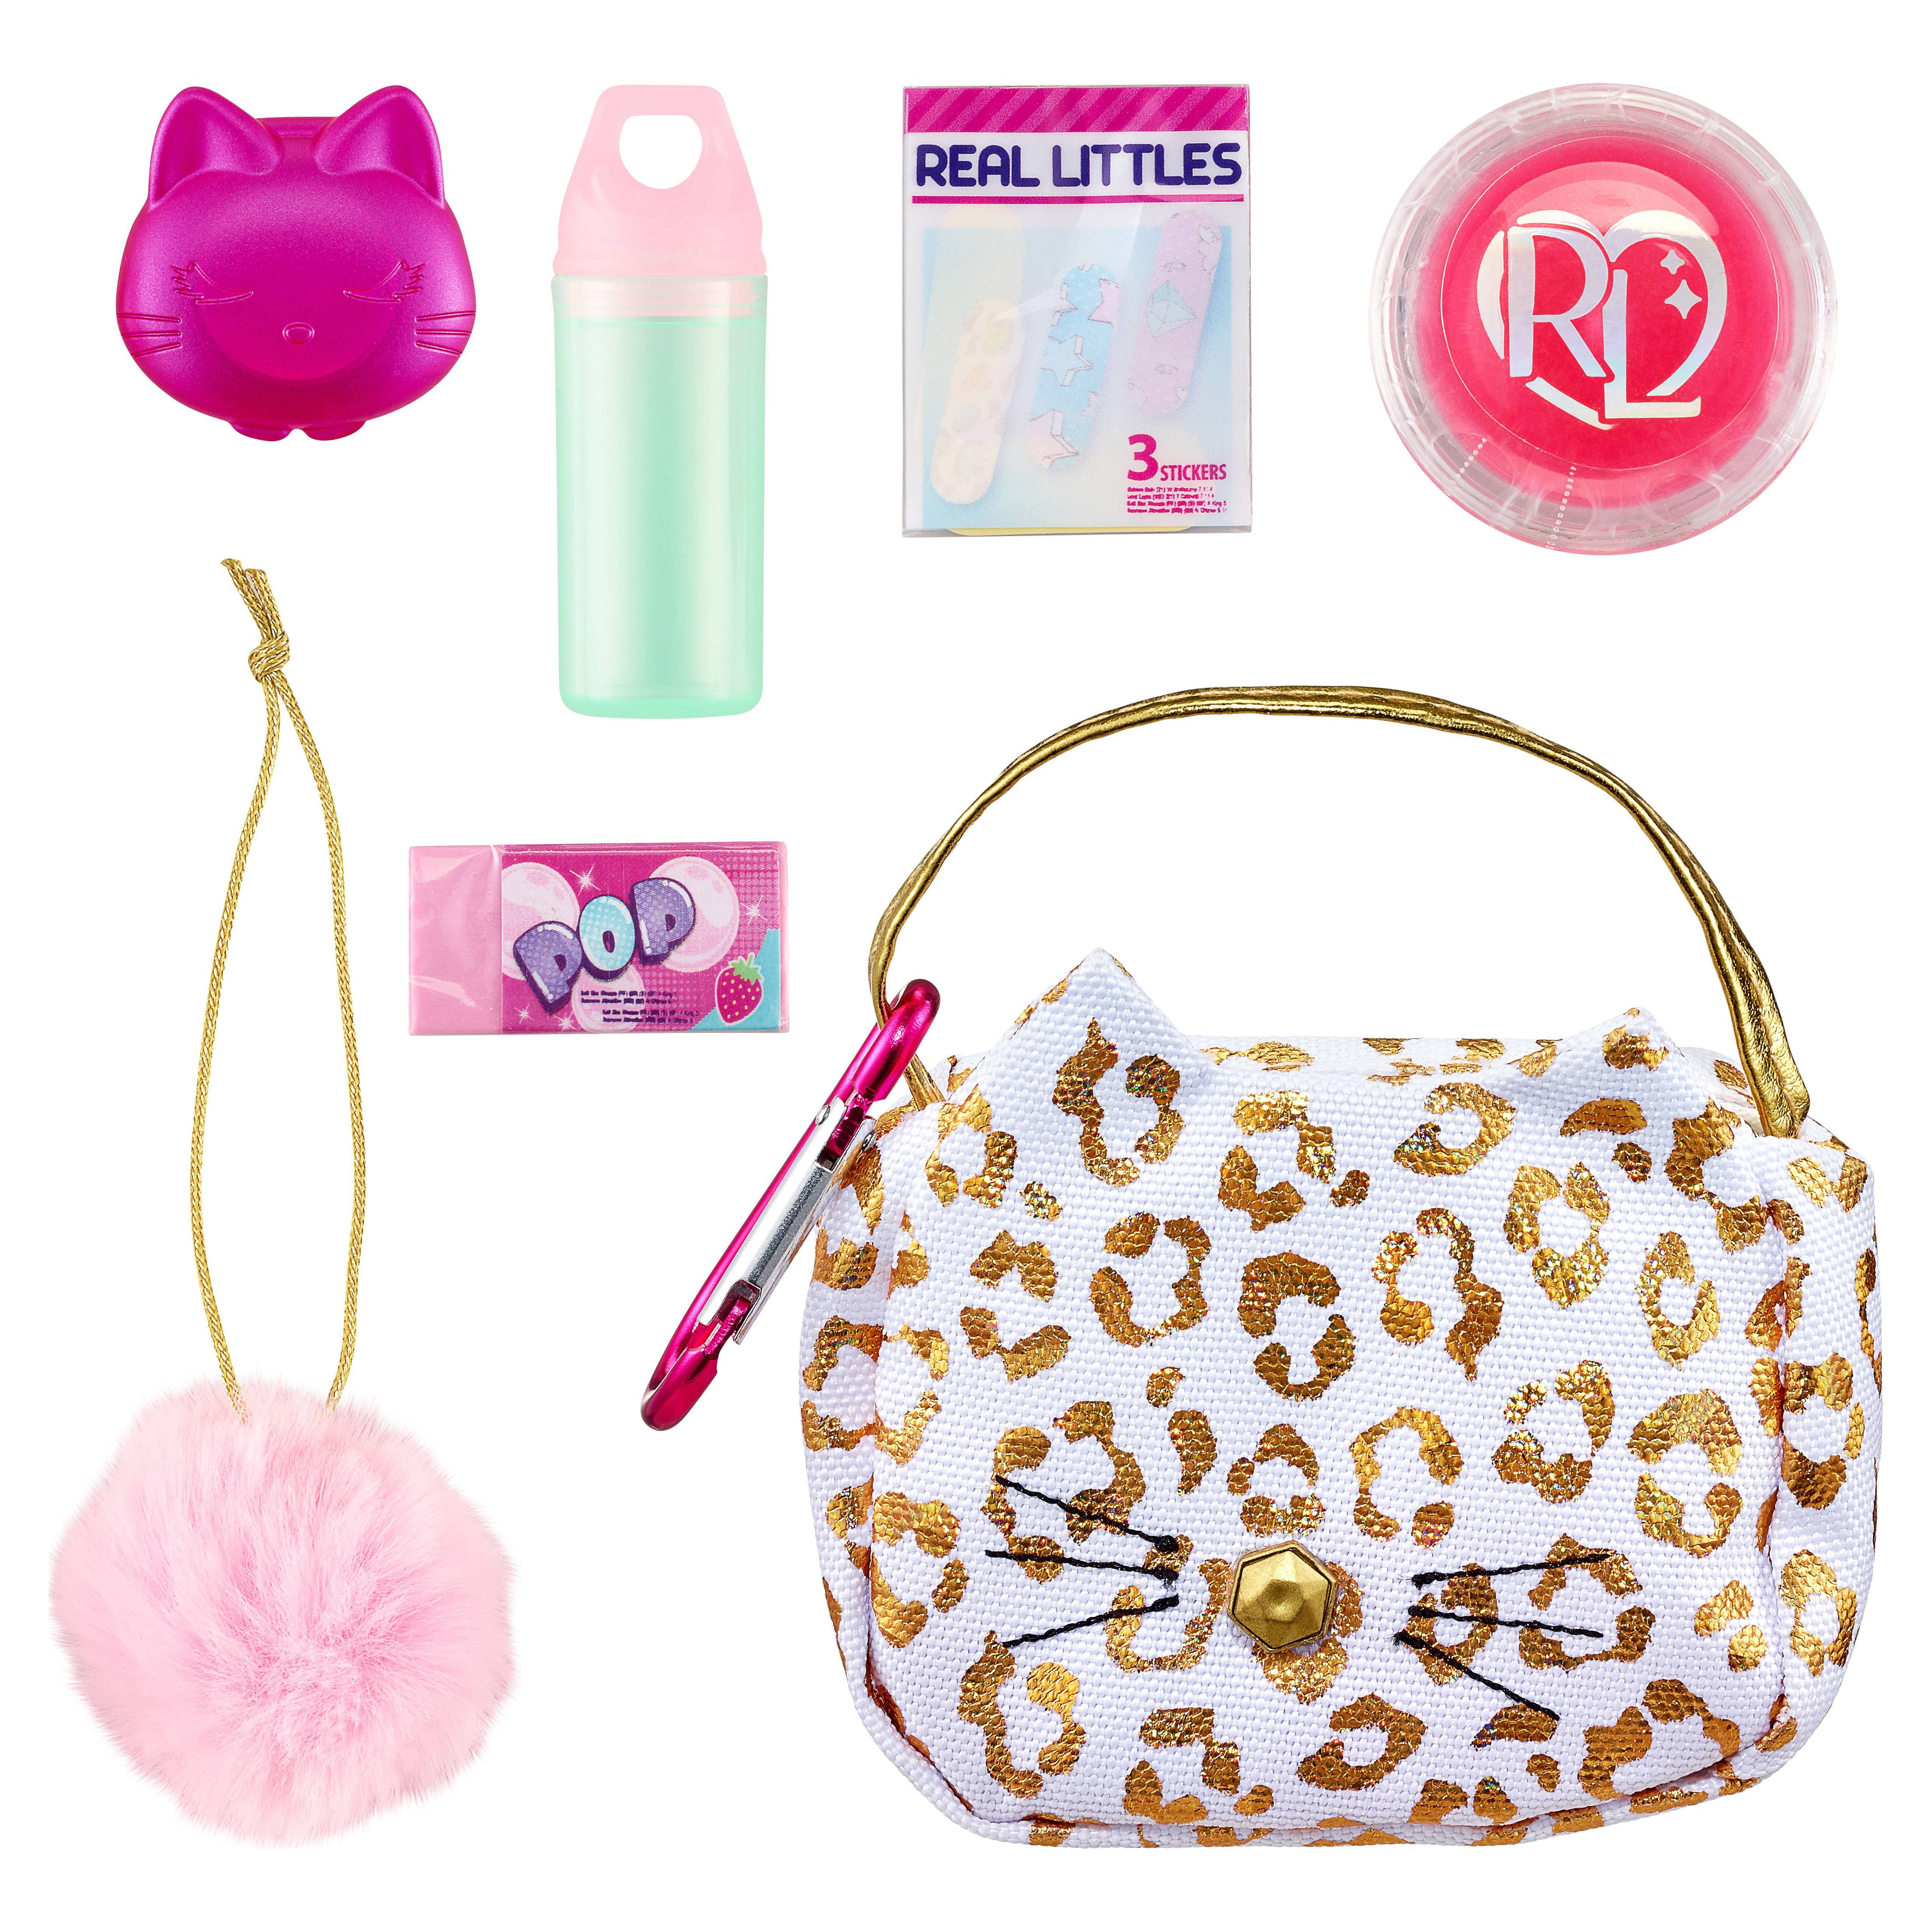 REAL LITTLES, Collectible Micro Handbag Collection, 5 Exclusive Bags